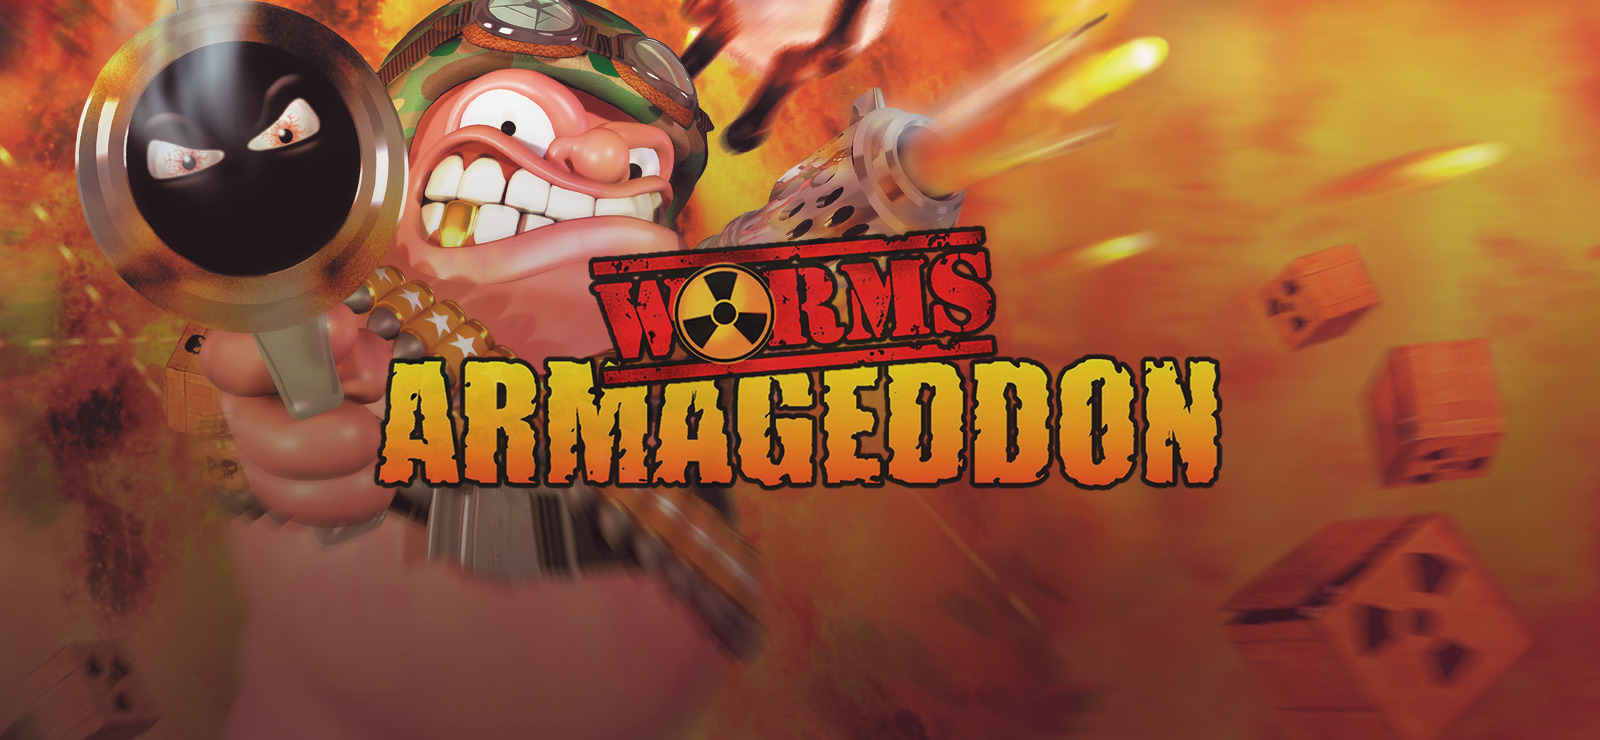 Worms armageddon on steam фото 19